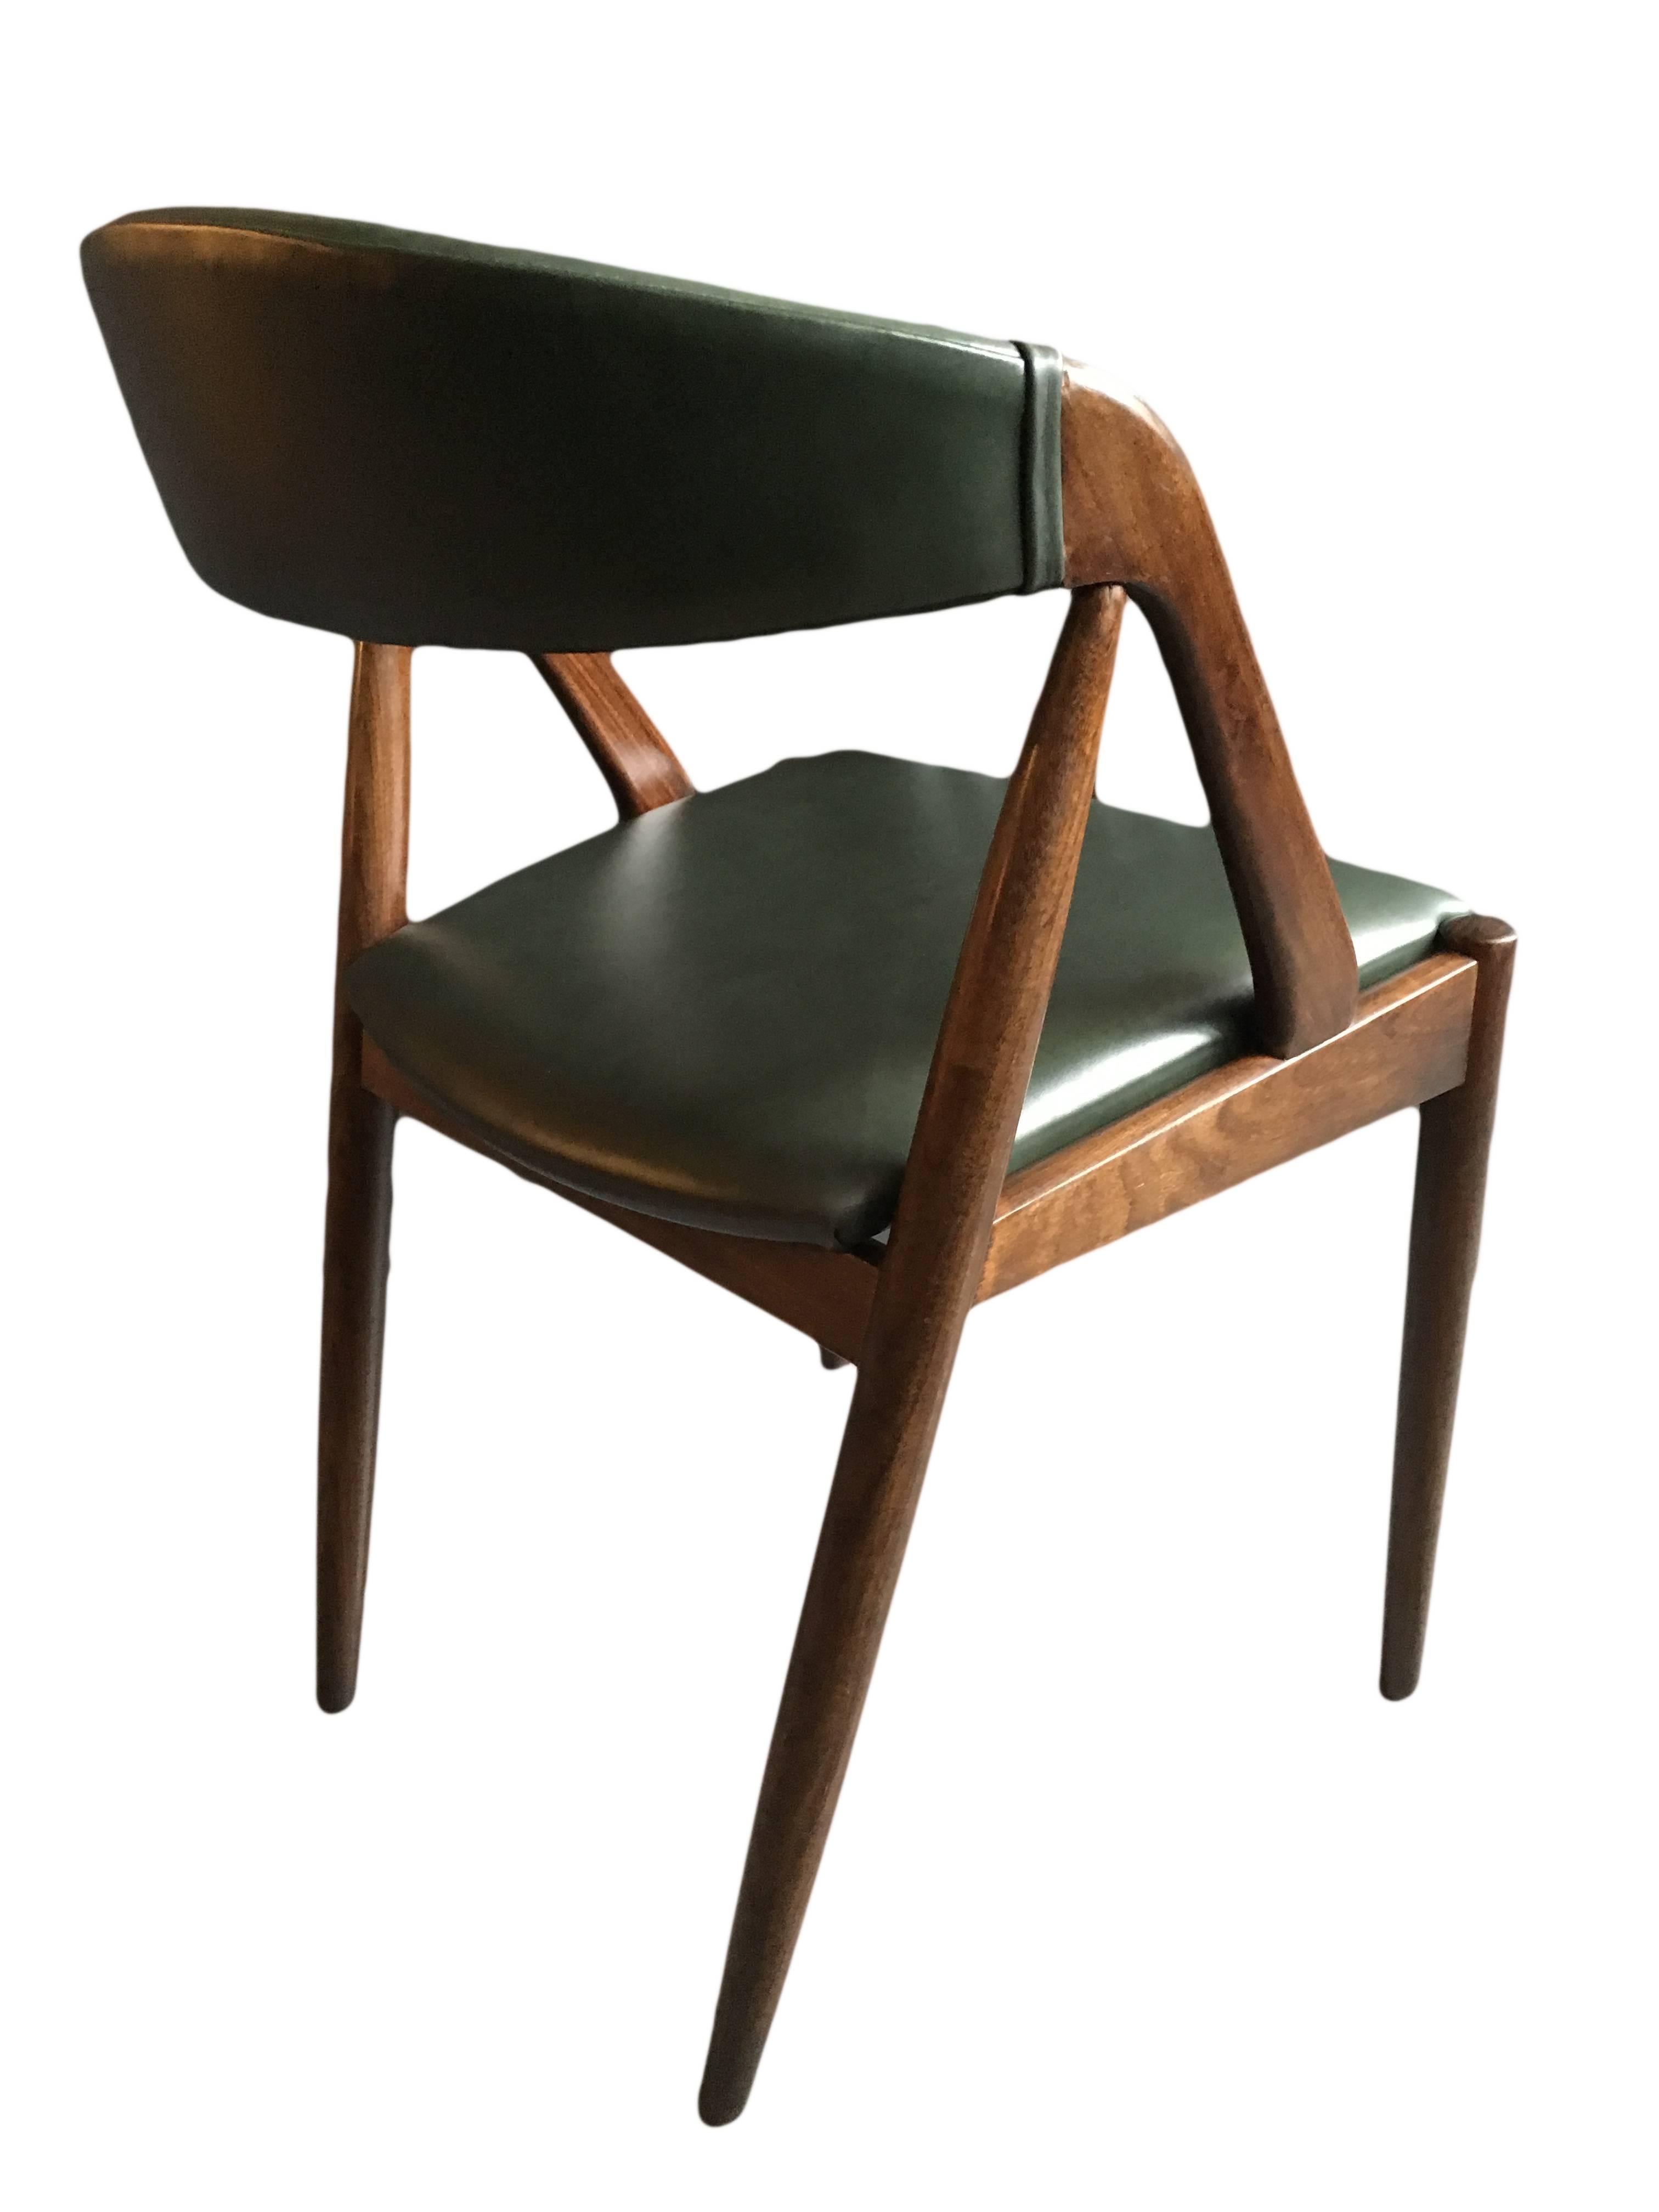 Kai Kristiansen Dining Chairs, model 31, restored set of 4. 2